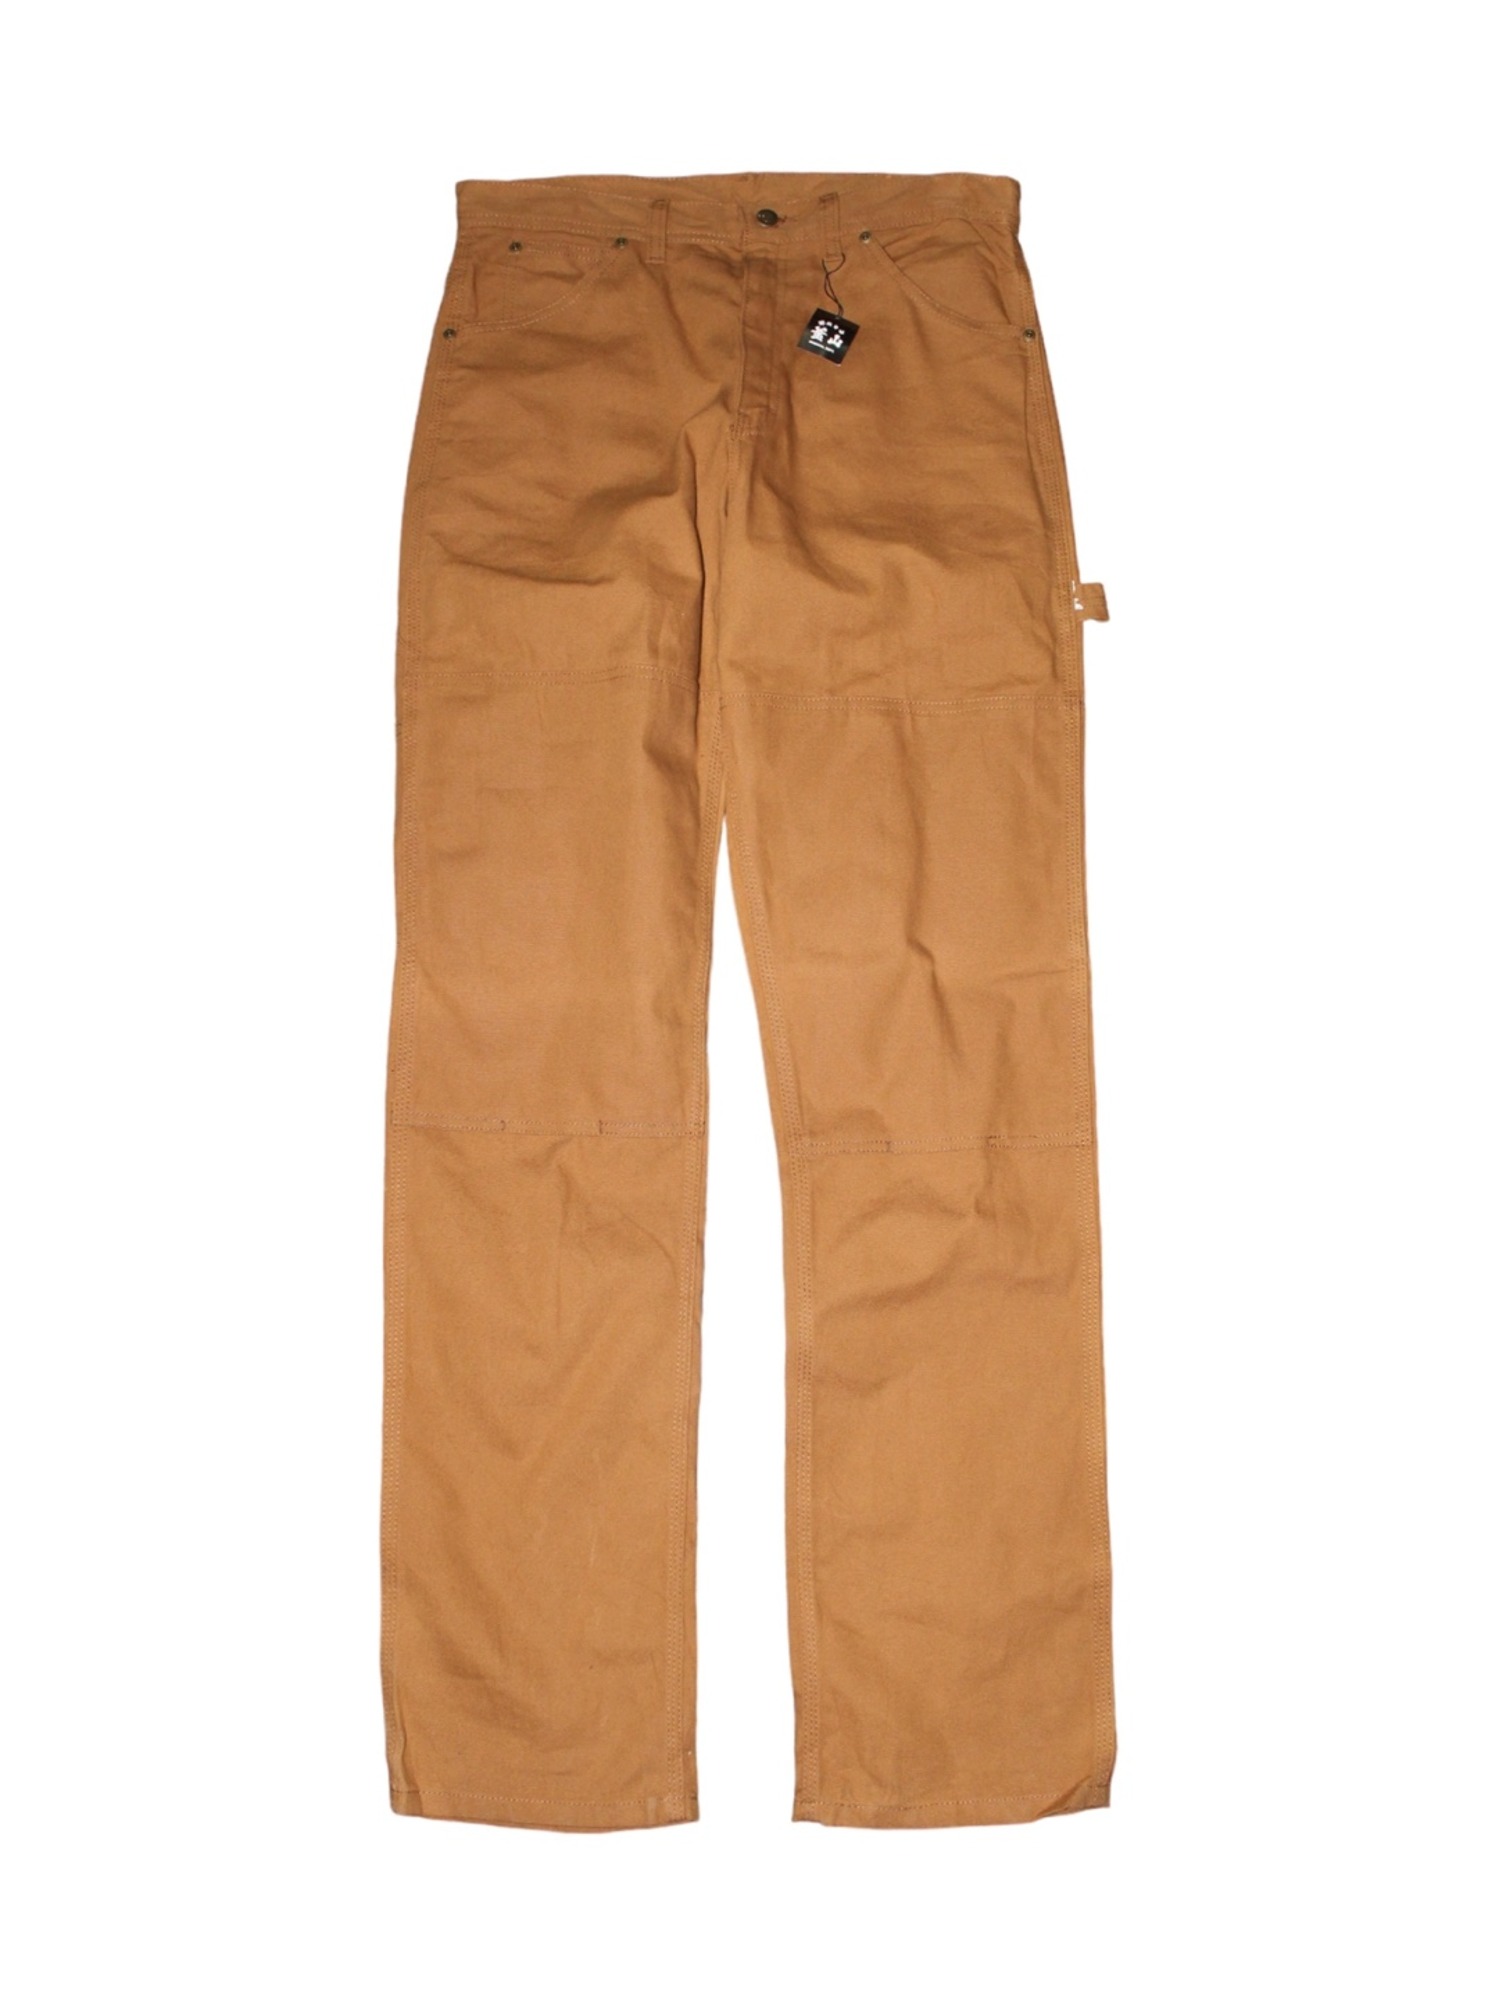 Key Carpenter Work Pants (brown)